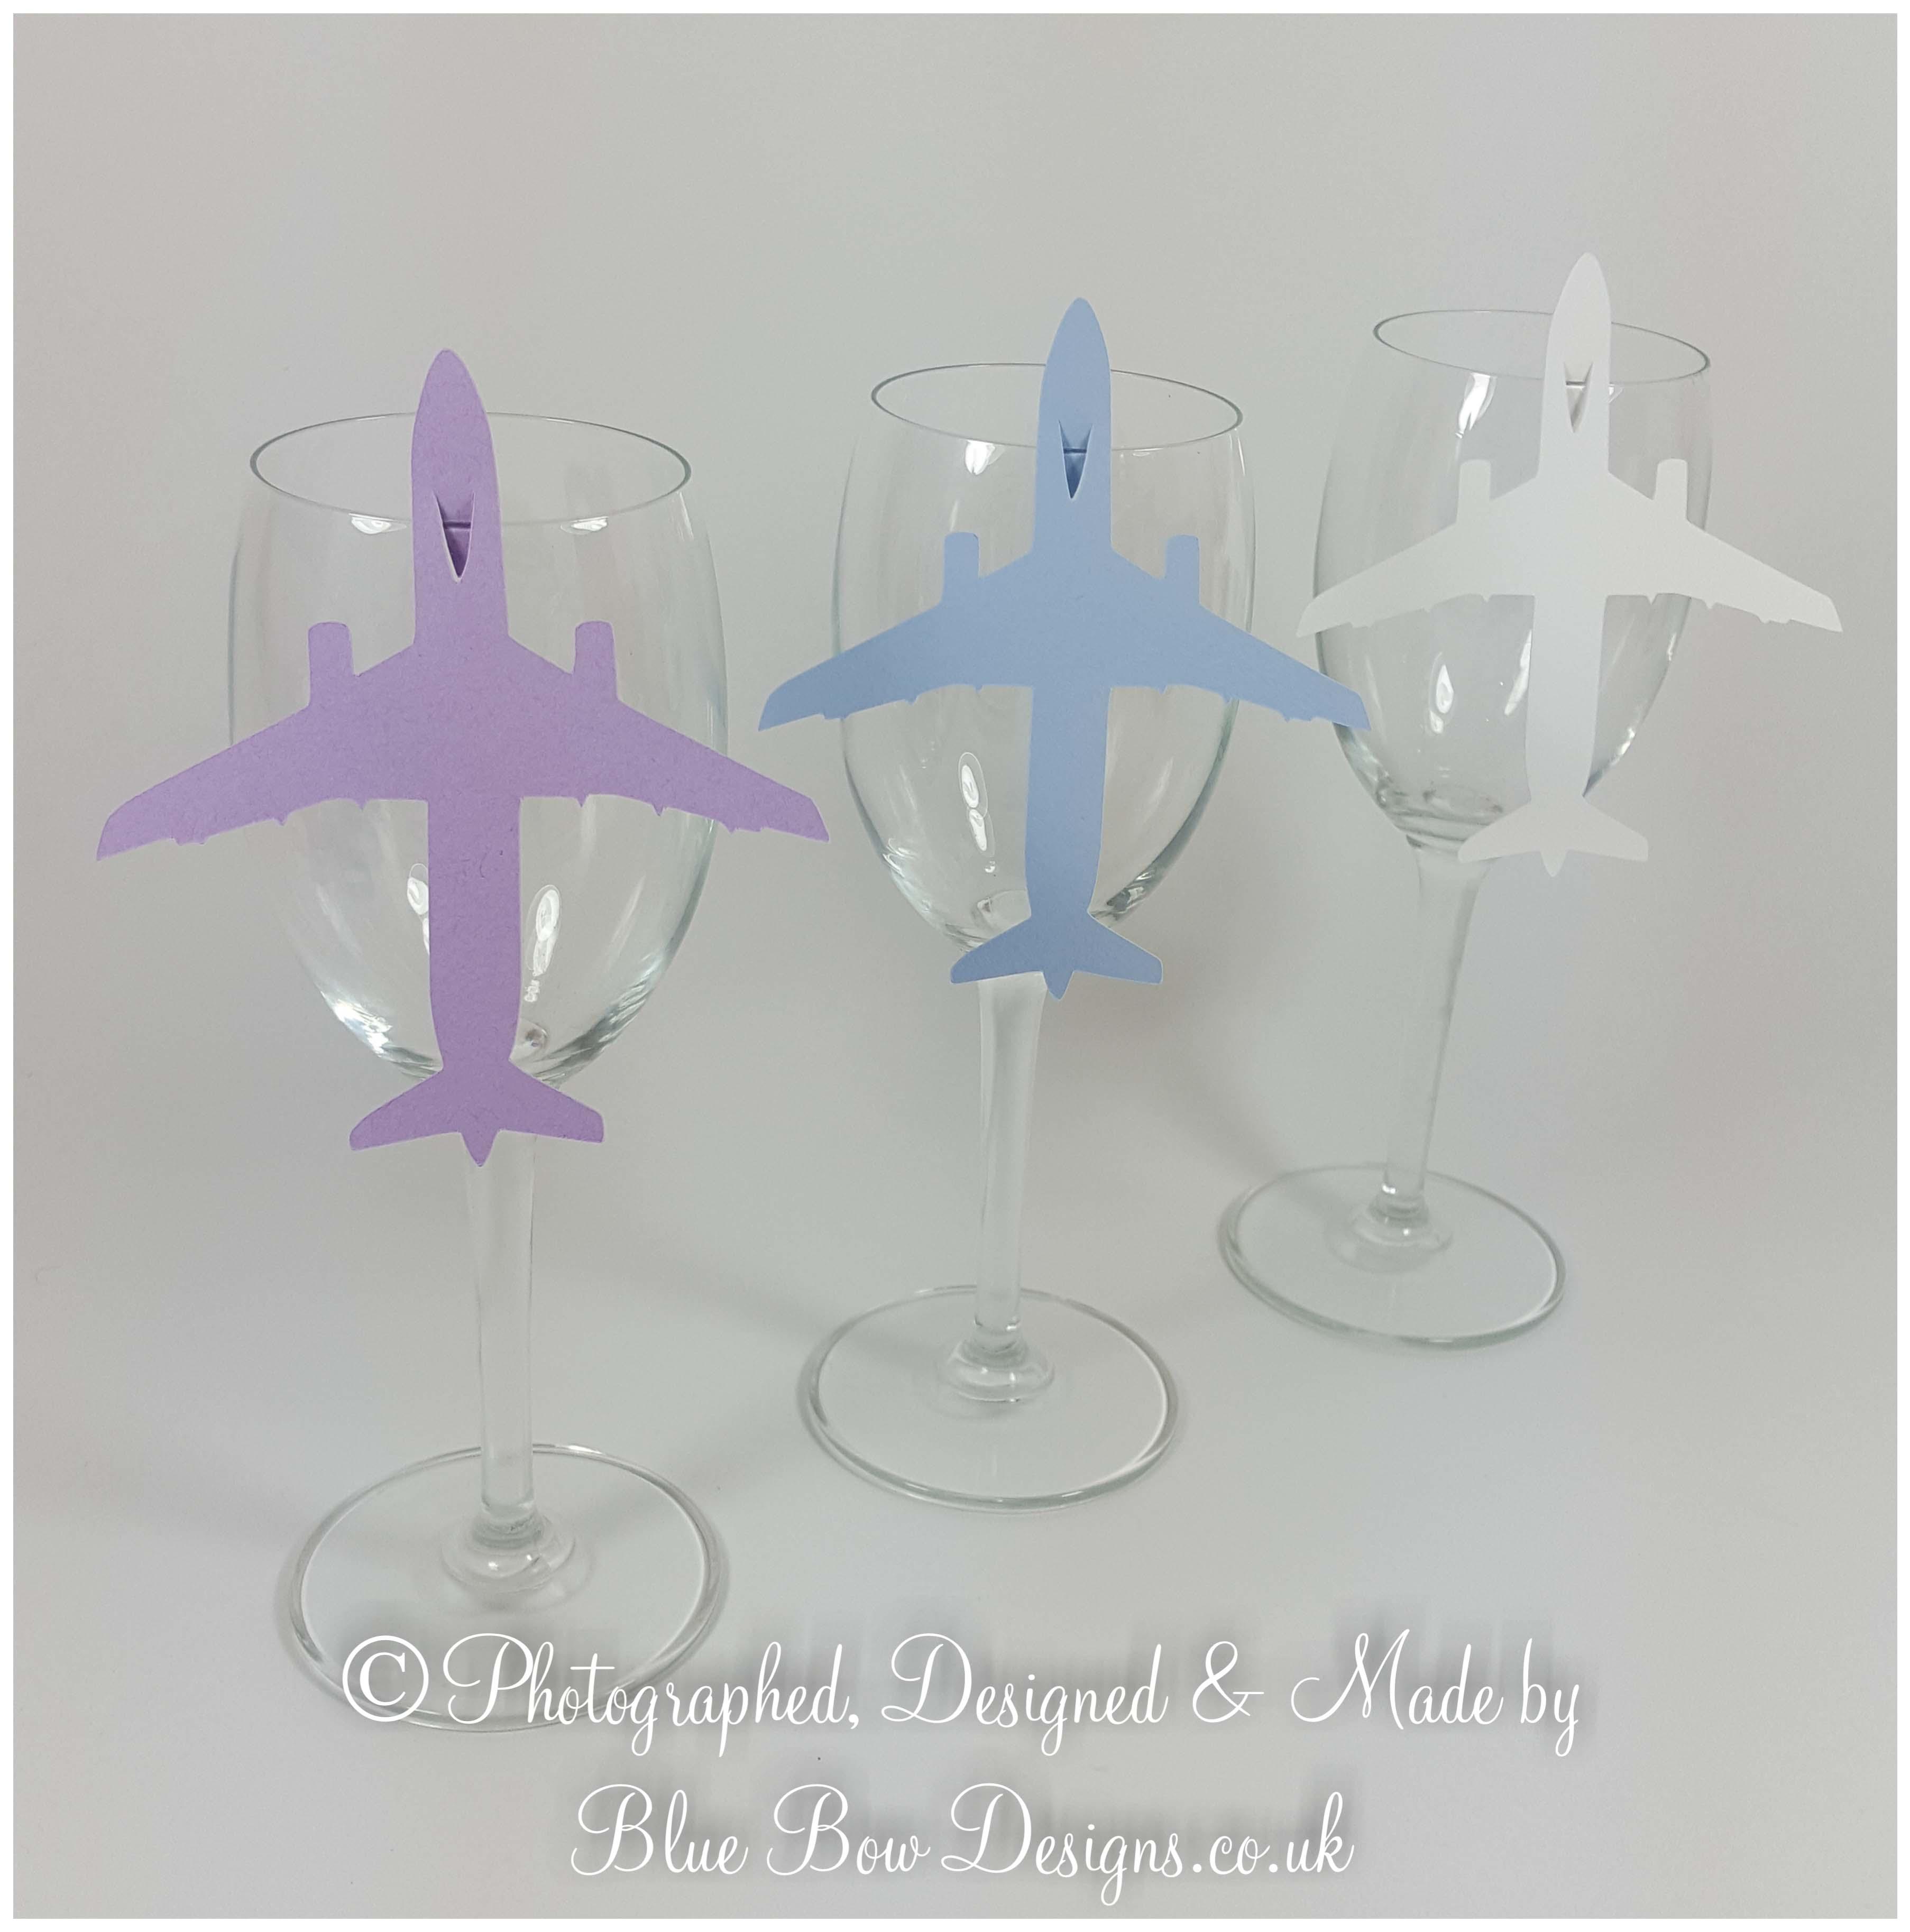 Aeroplane Plane wine glass cards any colour